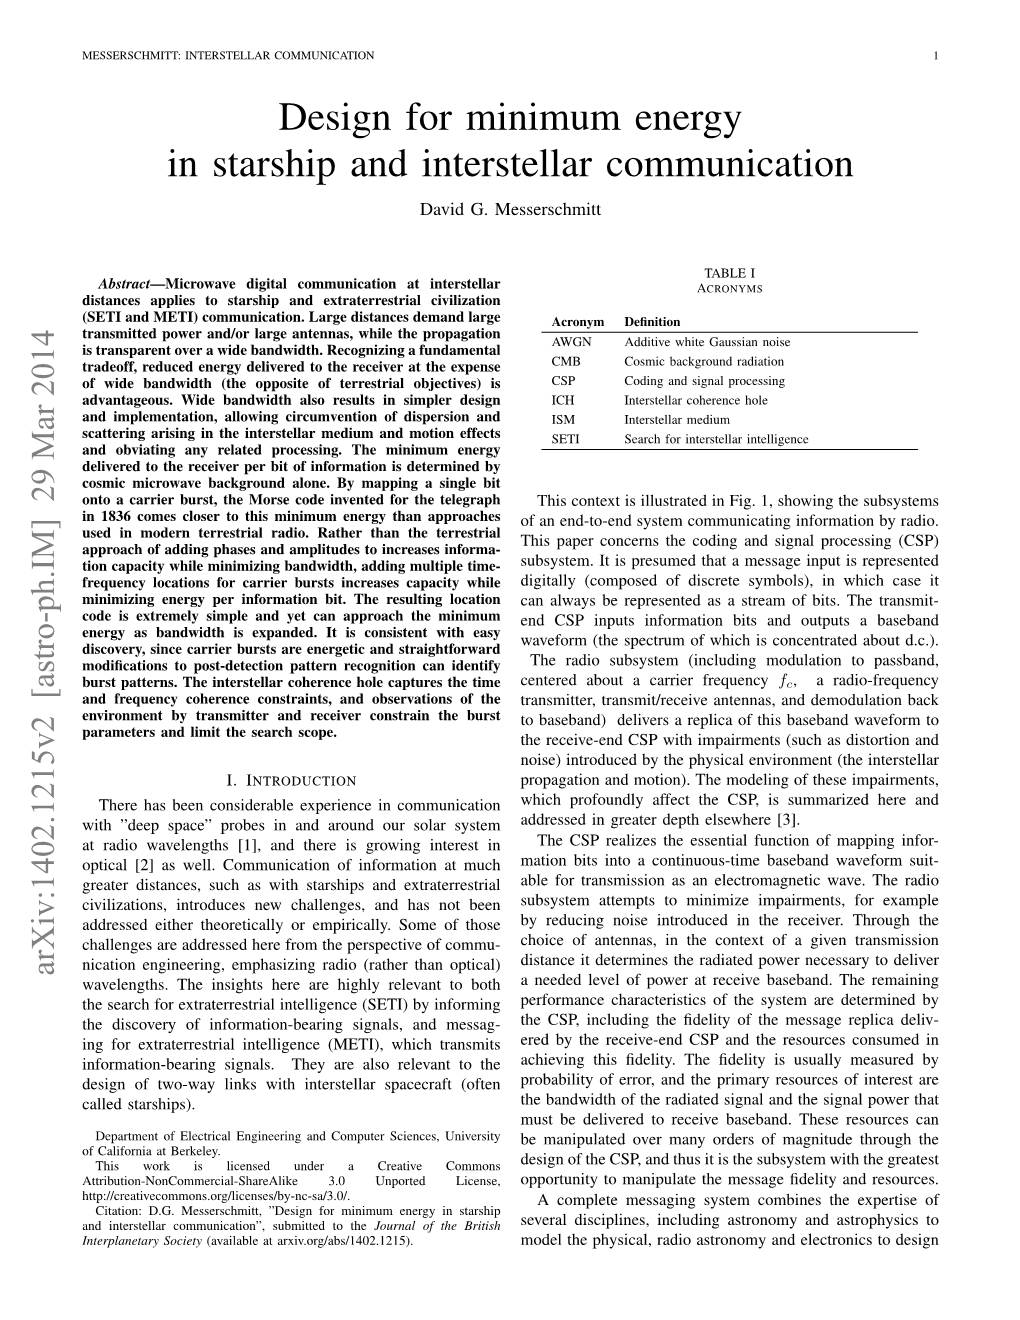 Design for Minimum Energy in Starship and Interstellar Communication David G